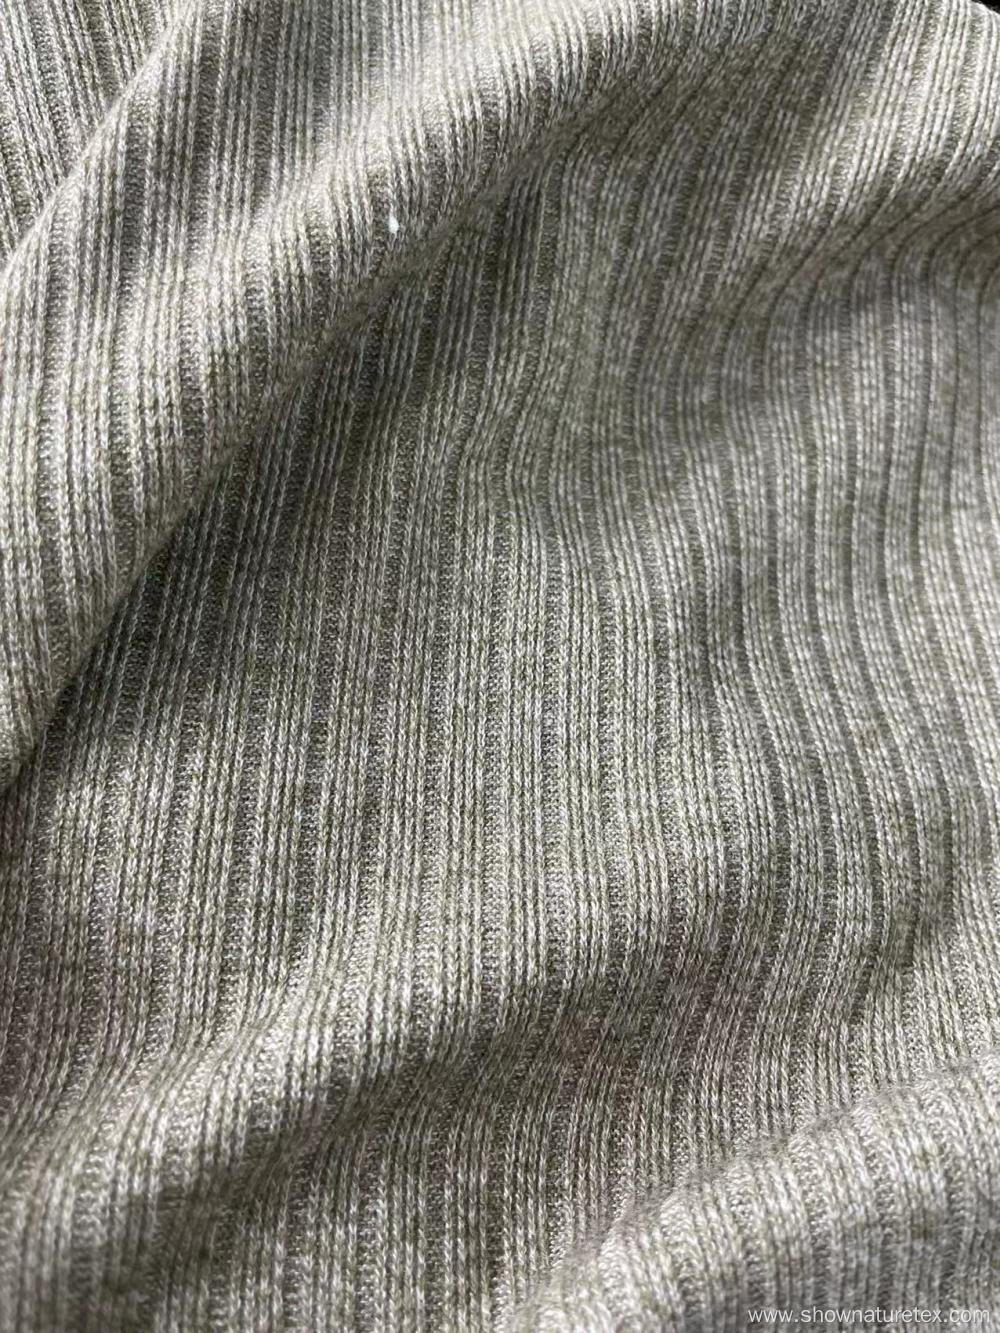 heavy rib in sweater looking